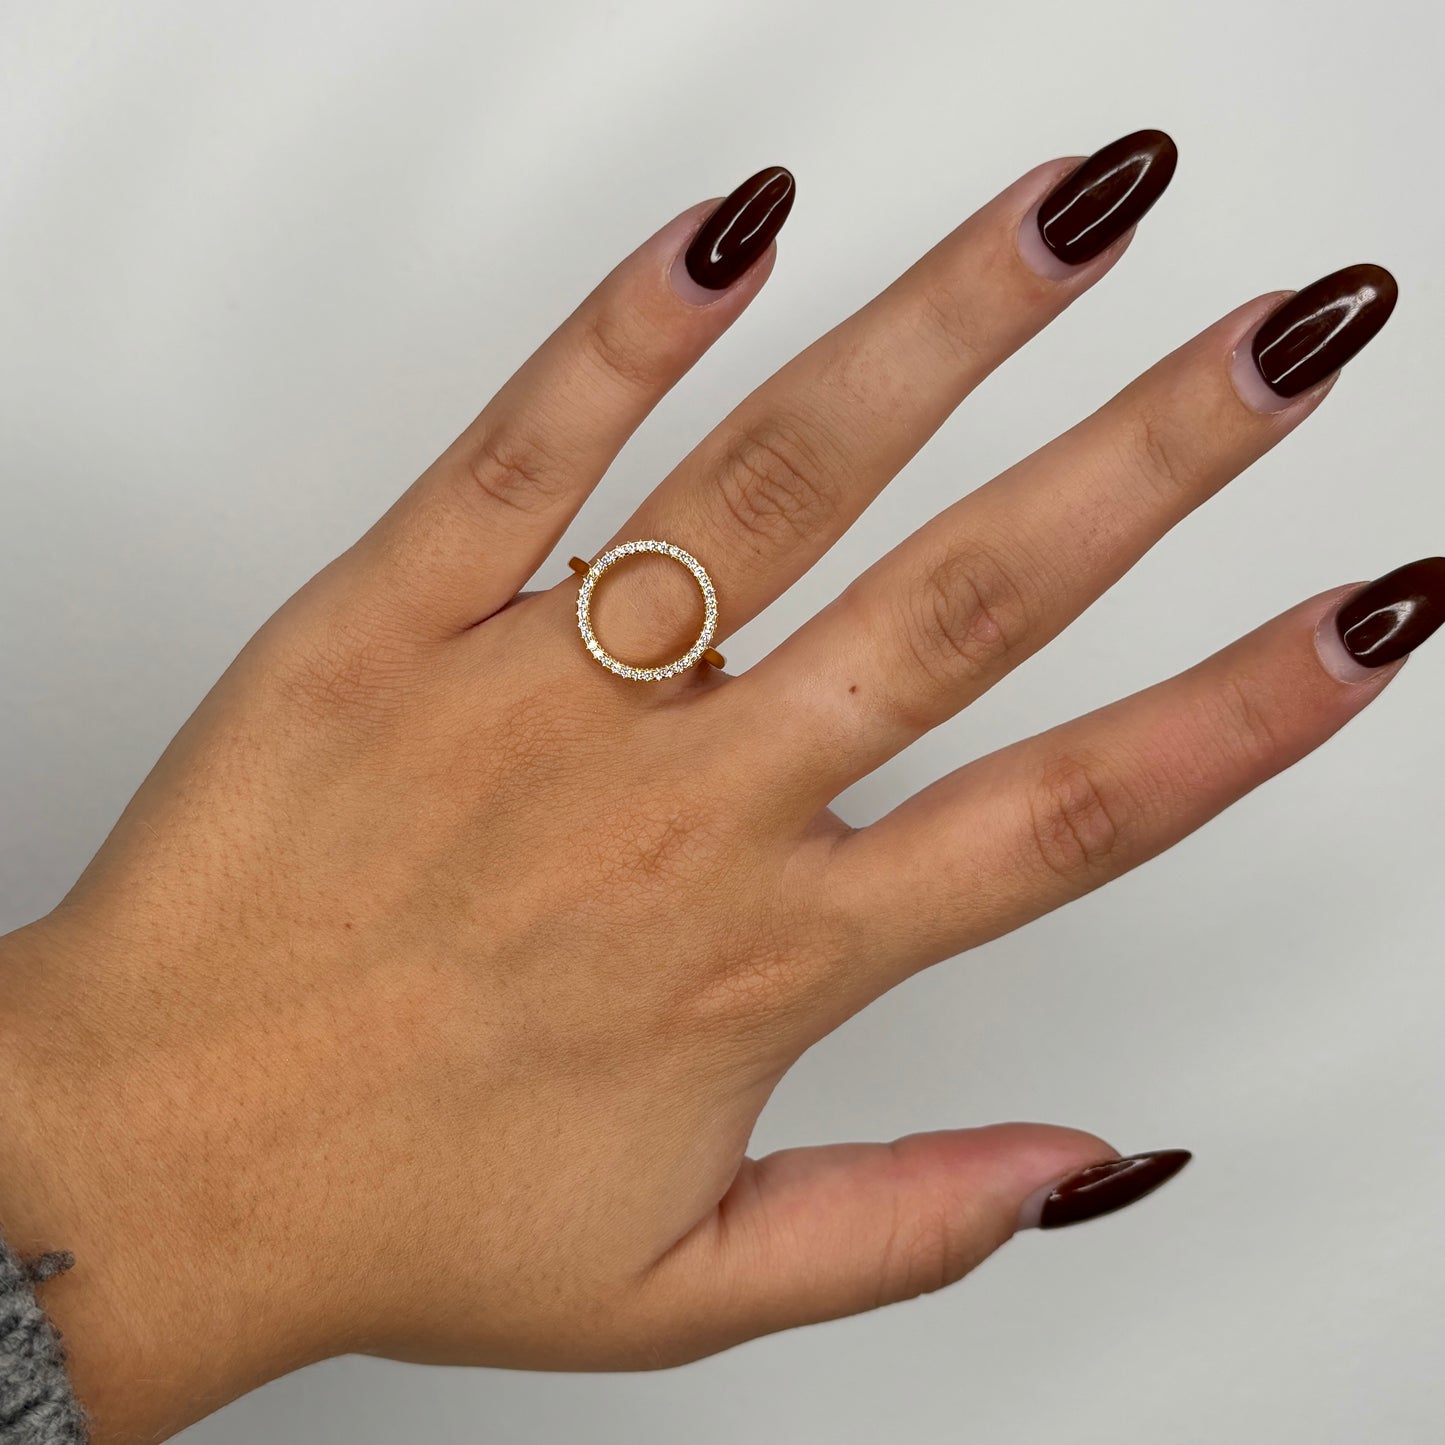 Ring "Sally" 925er Silber mit 18k-Vergoldung